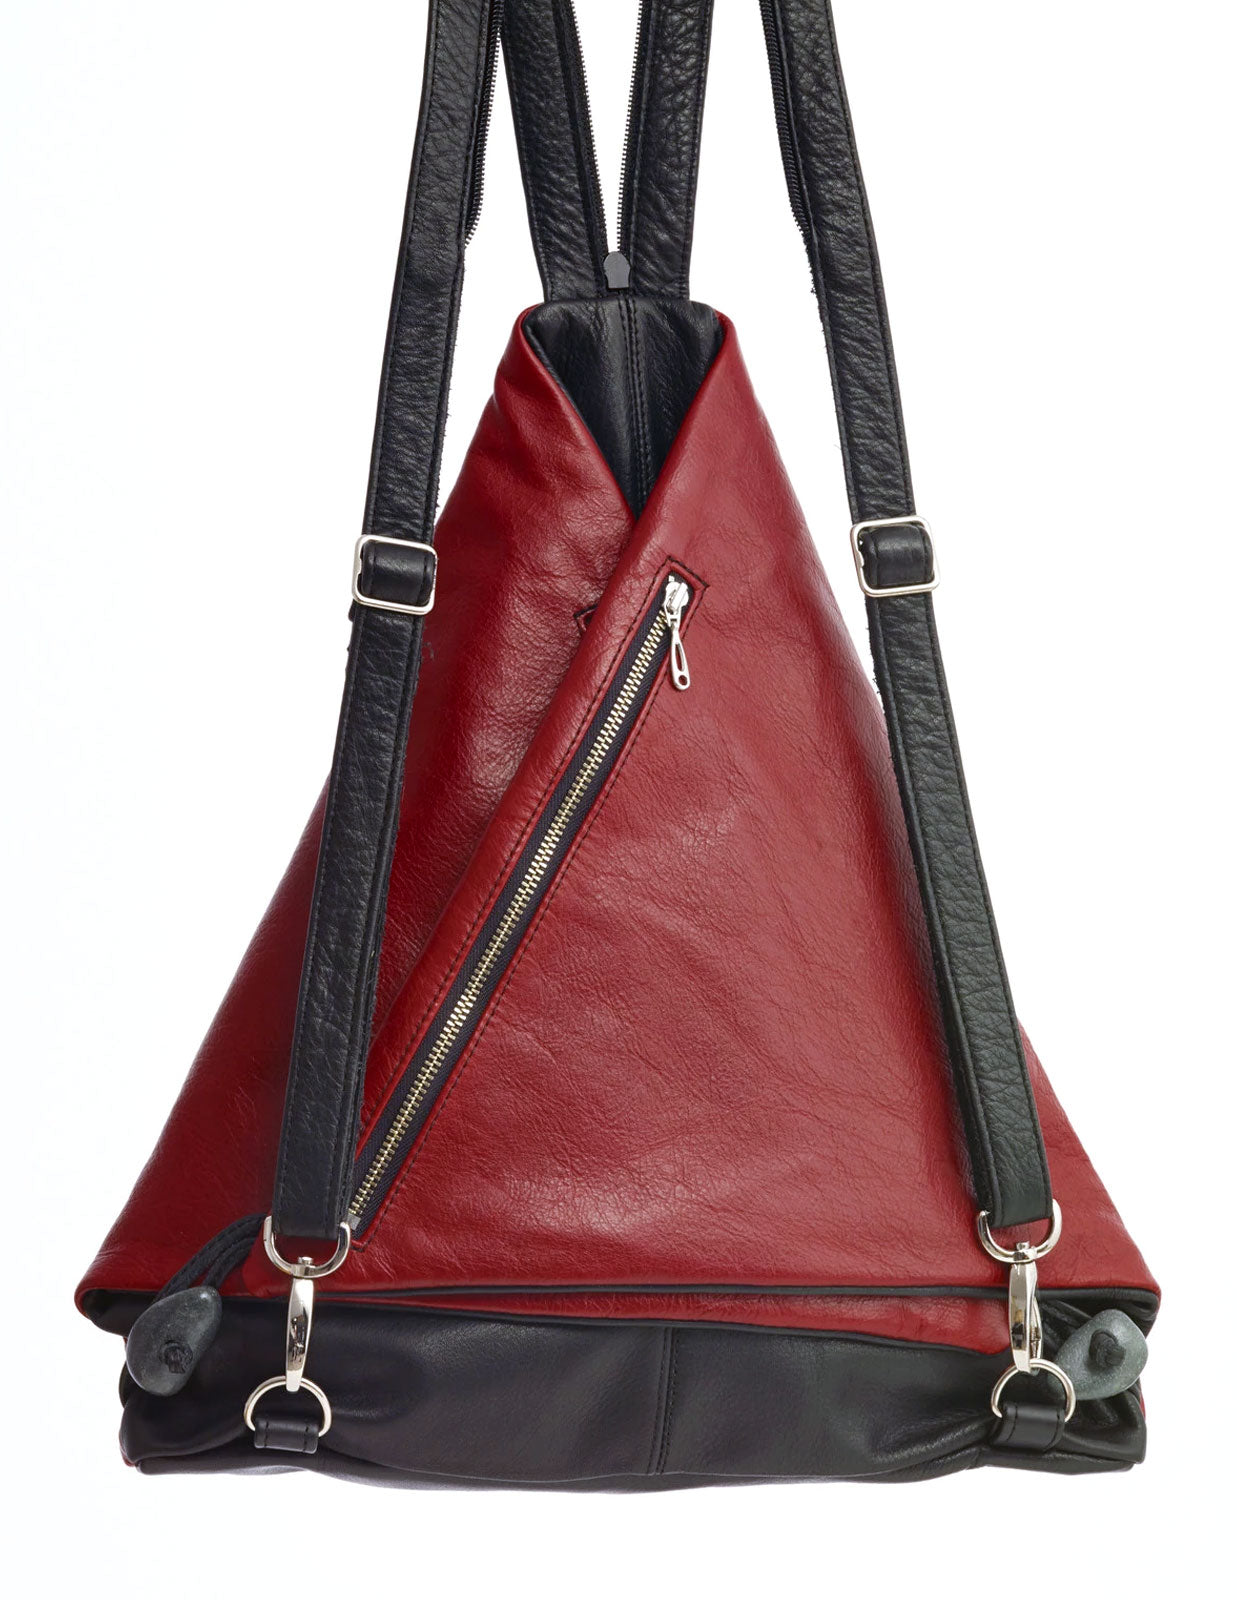 TRIANGLE BAG, Signature Leather Accessories